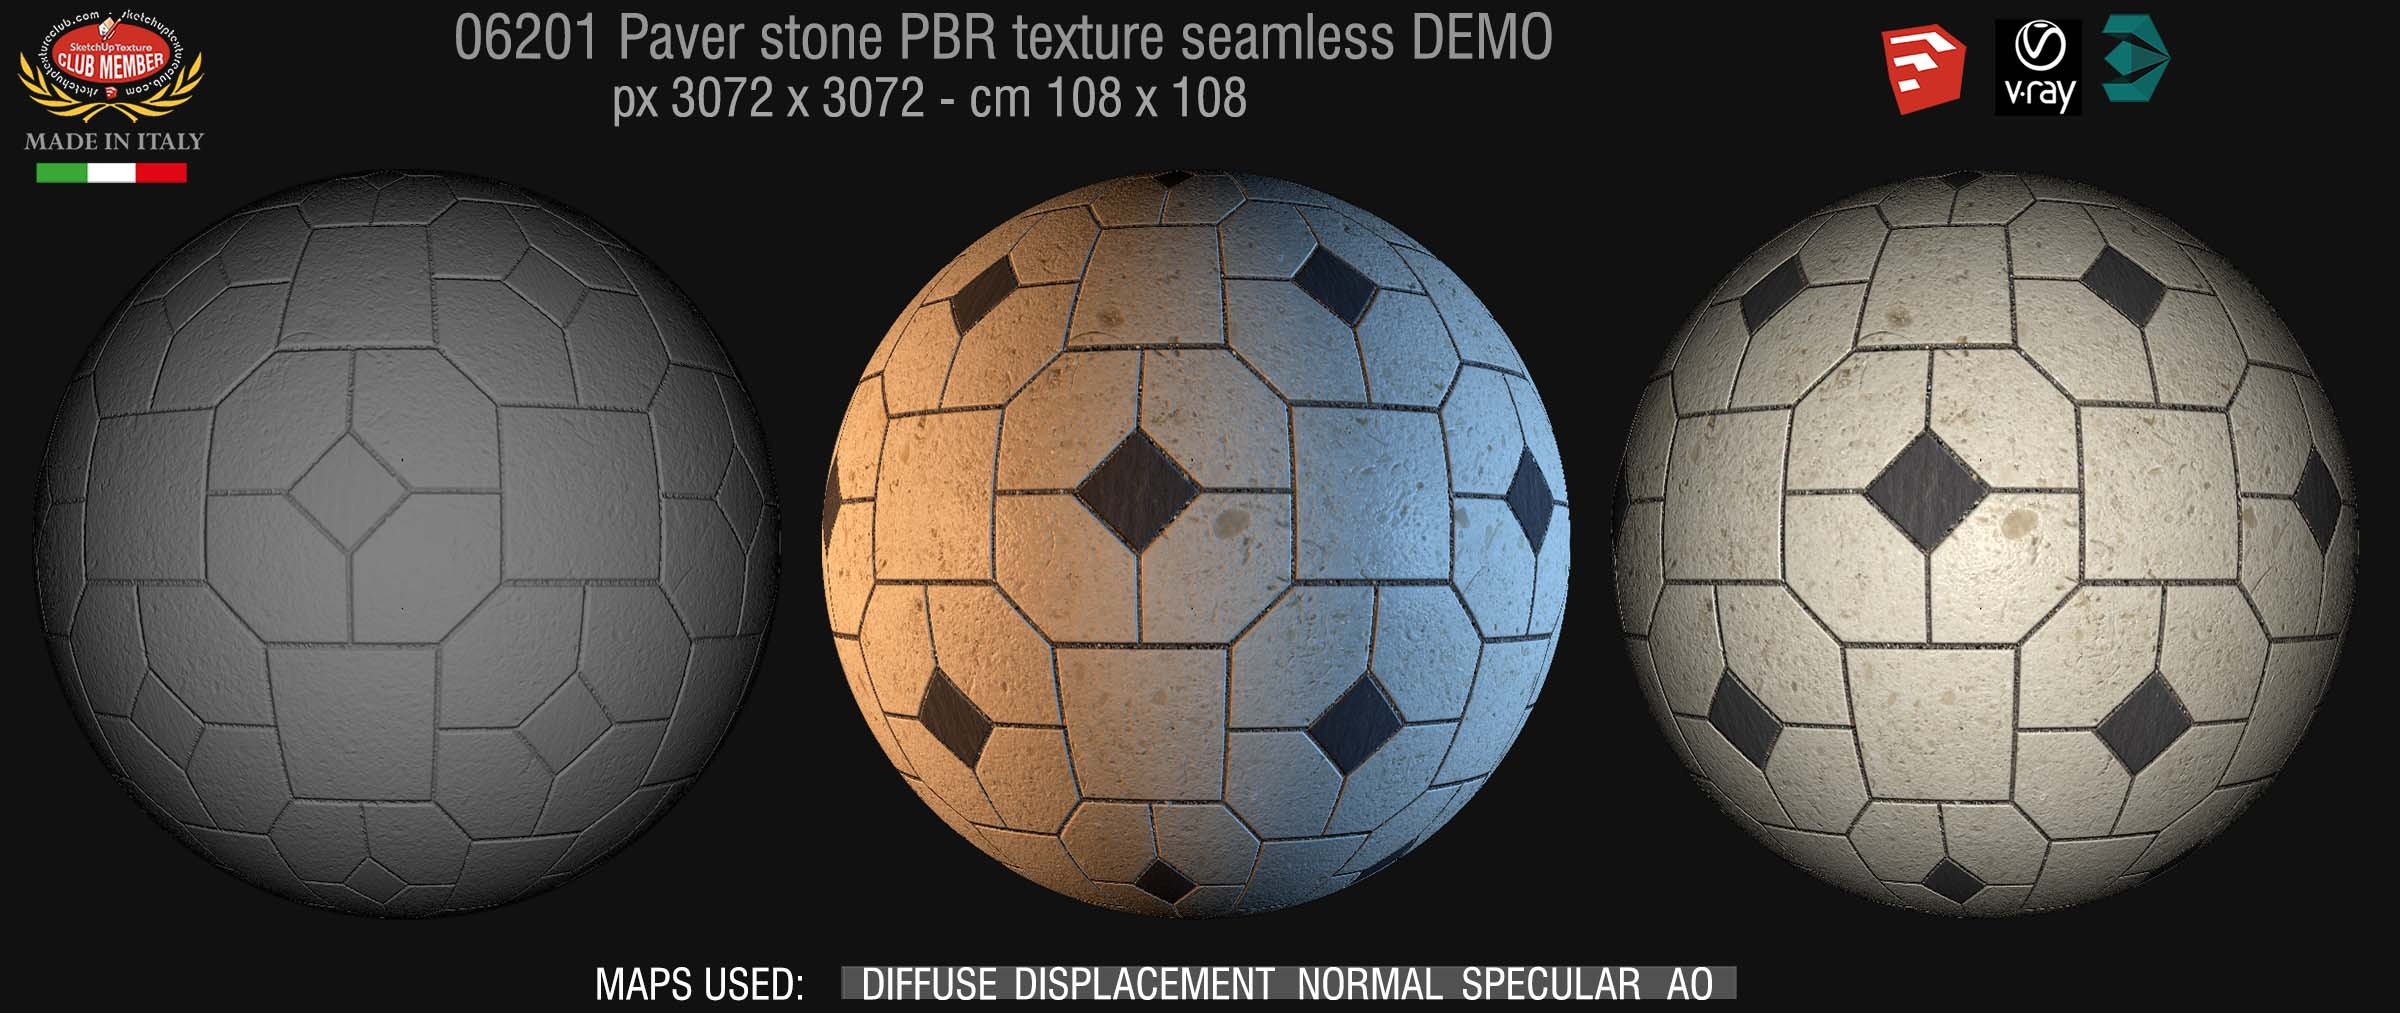 06201 Pavers stone PBR texture seamless DEMO